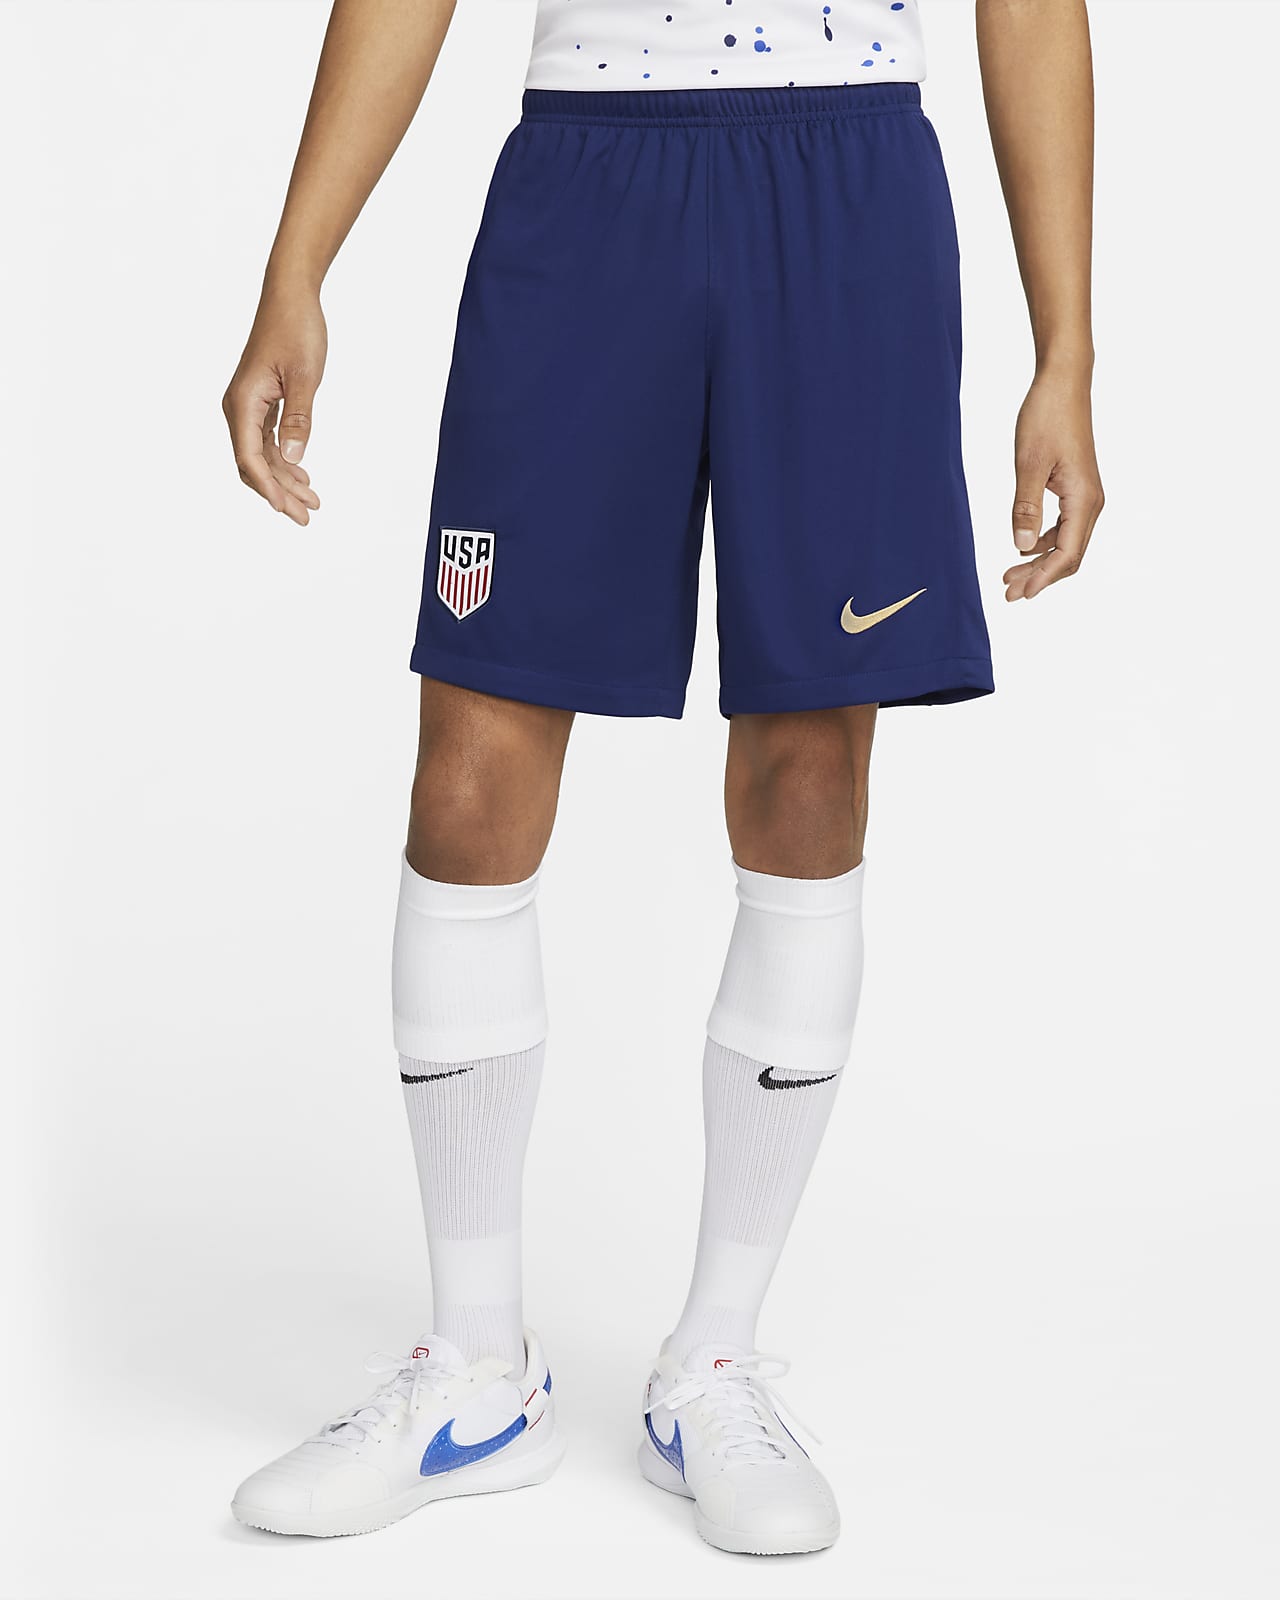 U.S. Soccer Men's Shorts - Official U.S. Soccer Store